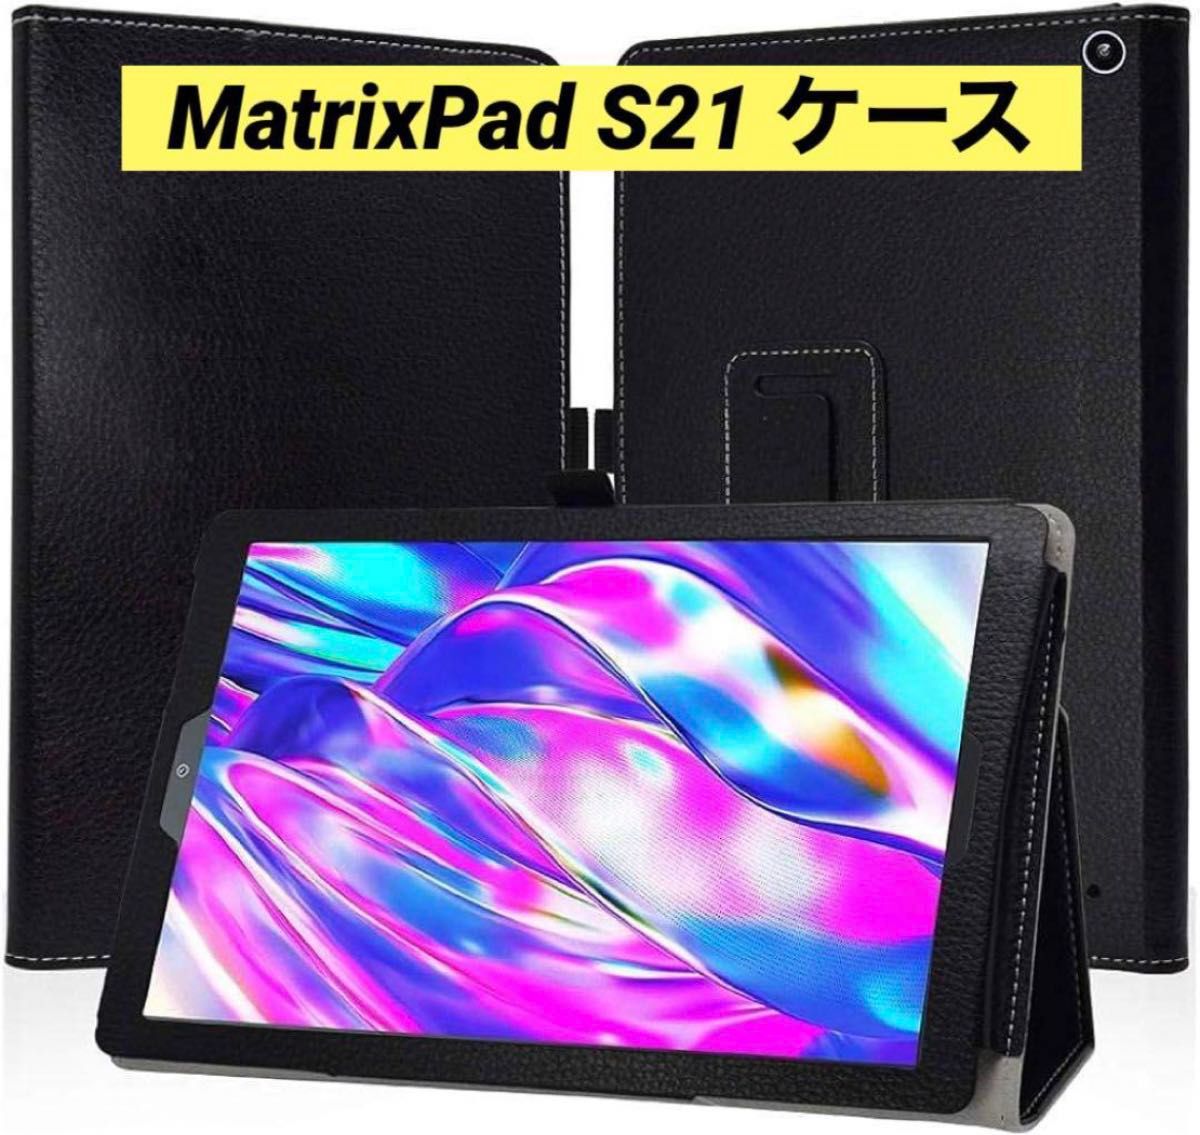 MatrixPad S21 Vankyo S21 ケース 軽量 薄型 保護 黒 タブレット 保護